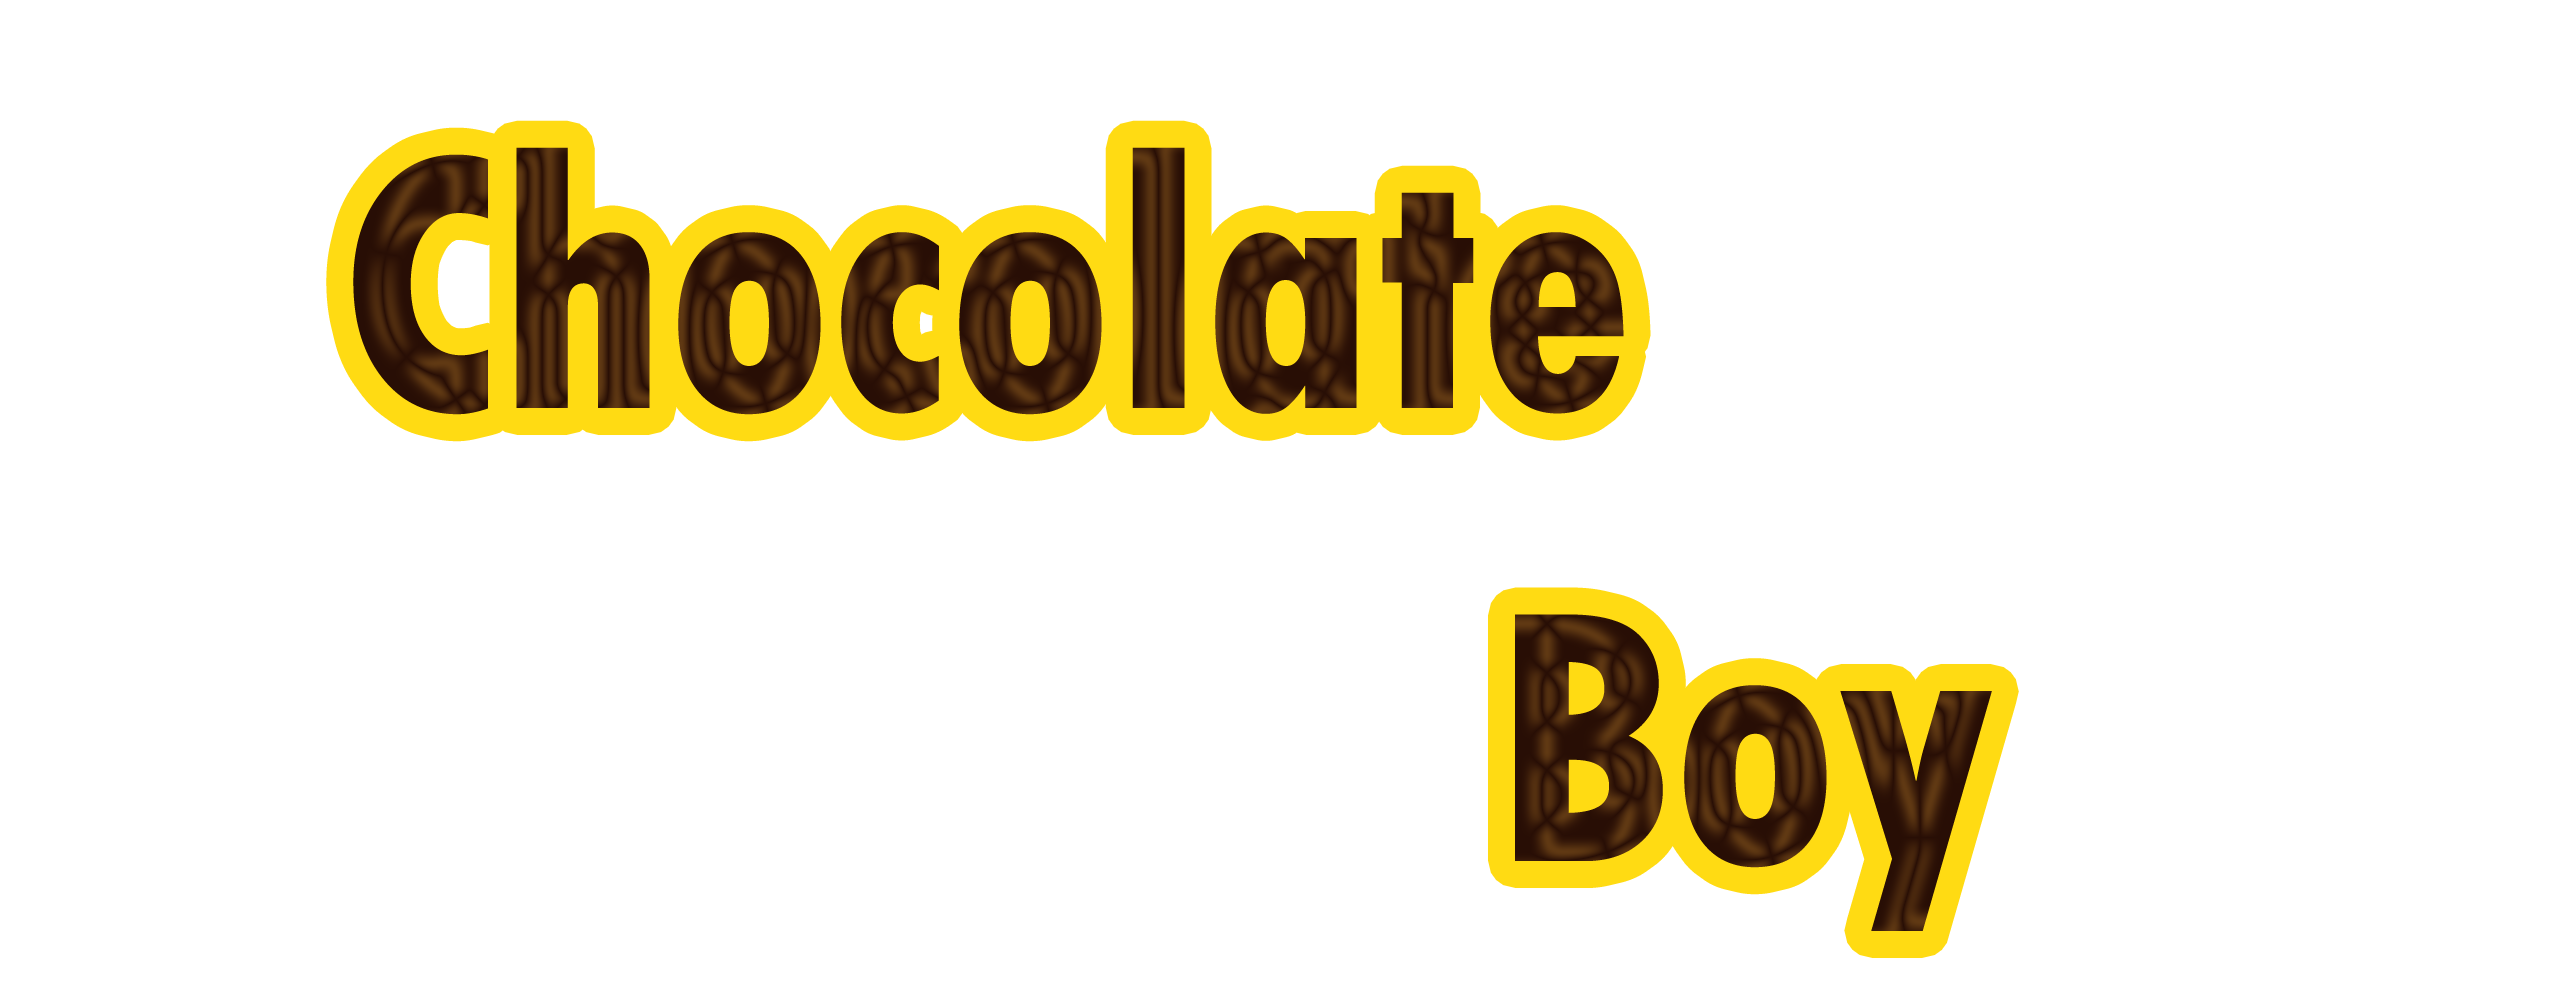 Chocolate Boy #8